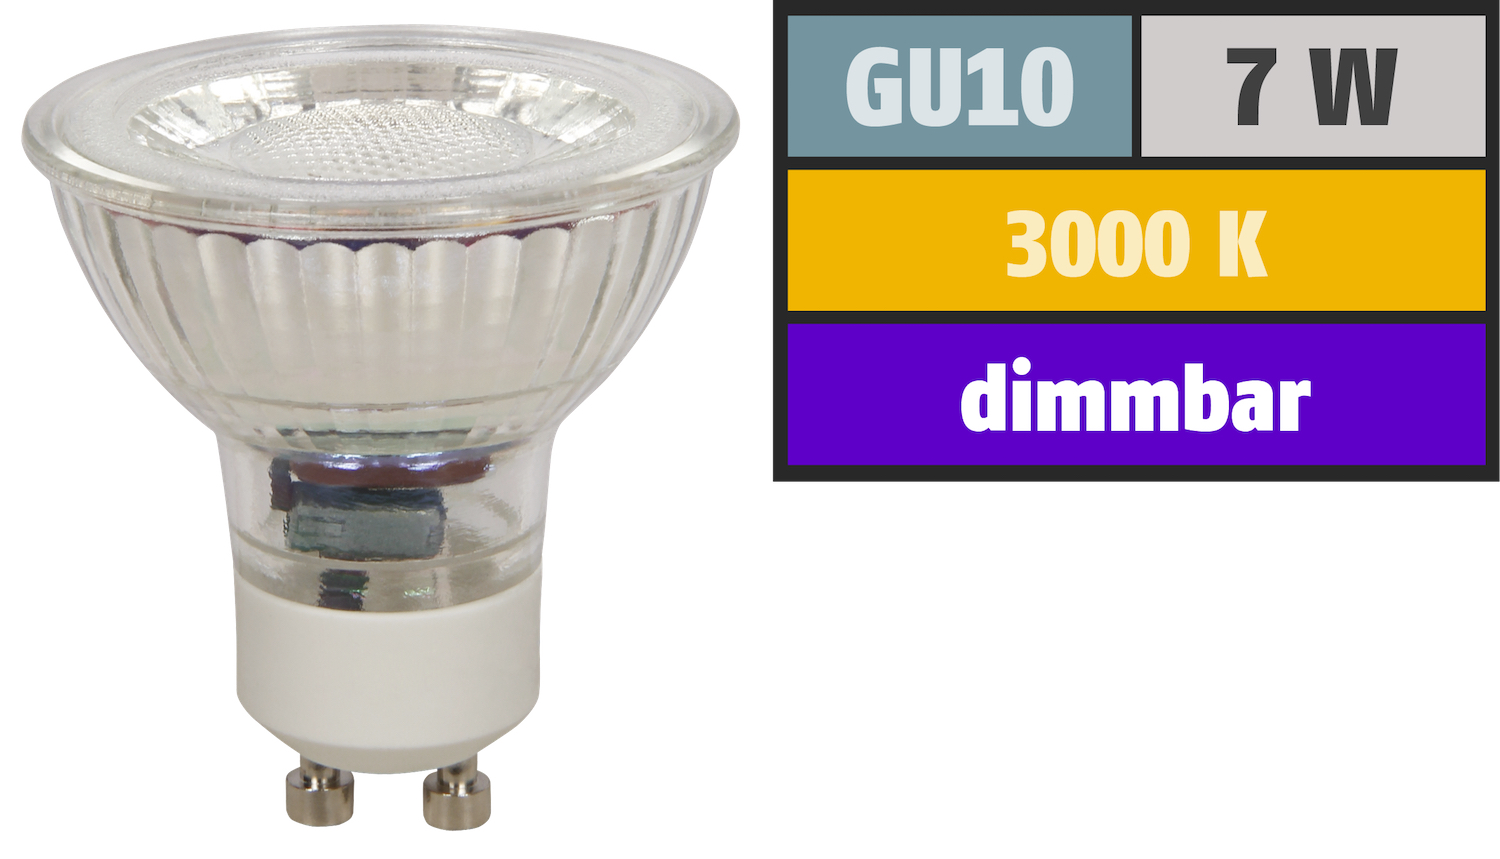 LED Einbauspots Lucy 230V7WStufenlos DimmbarBohrloch 68mmGu10 Lampen 